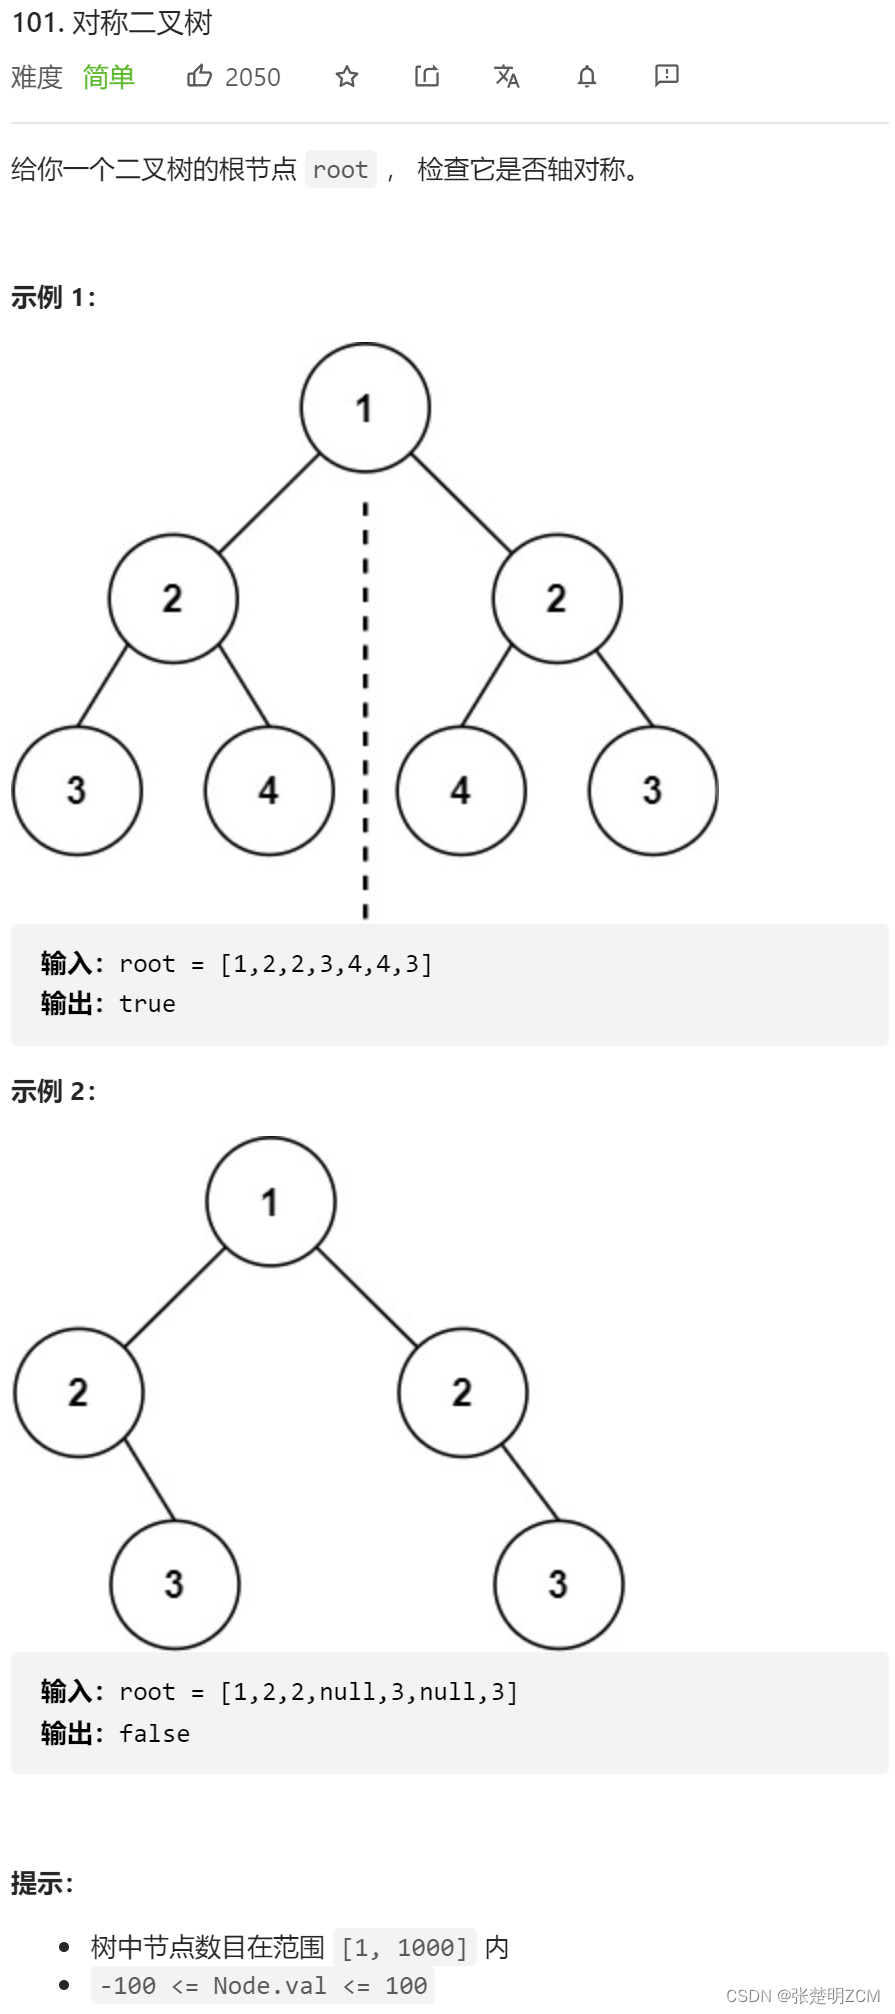 LeetCode #101. Symmetric Binary Tree